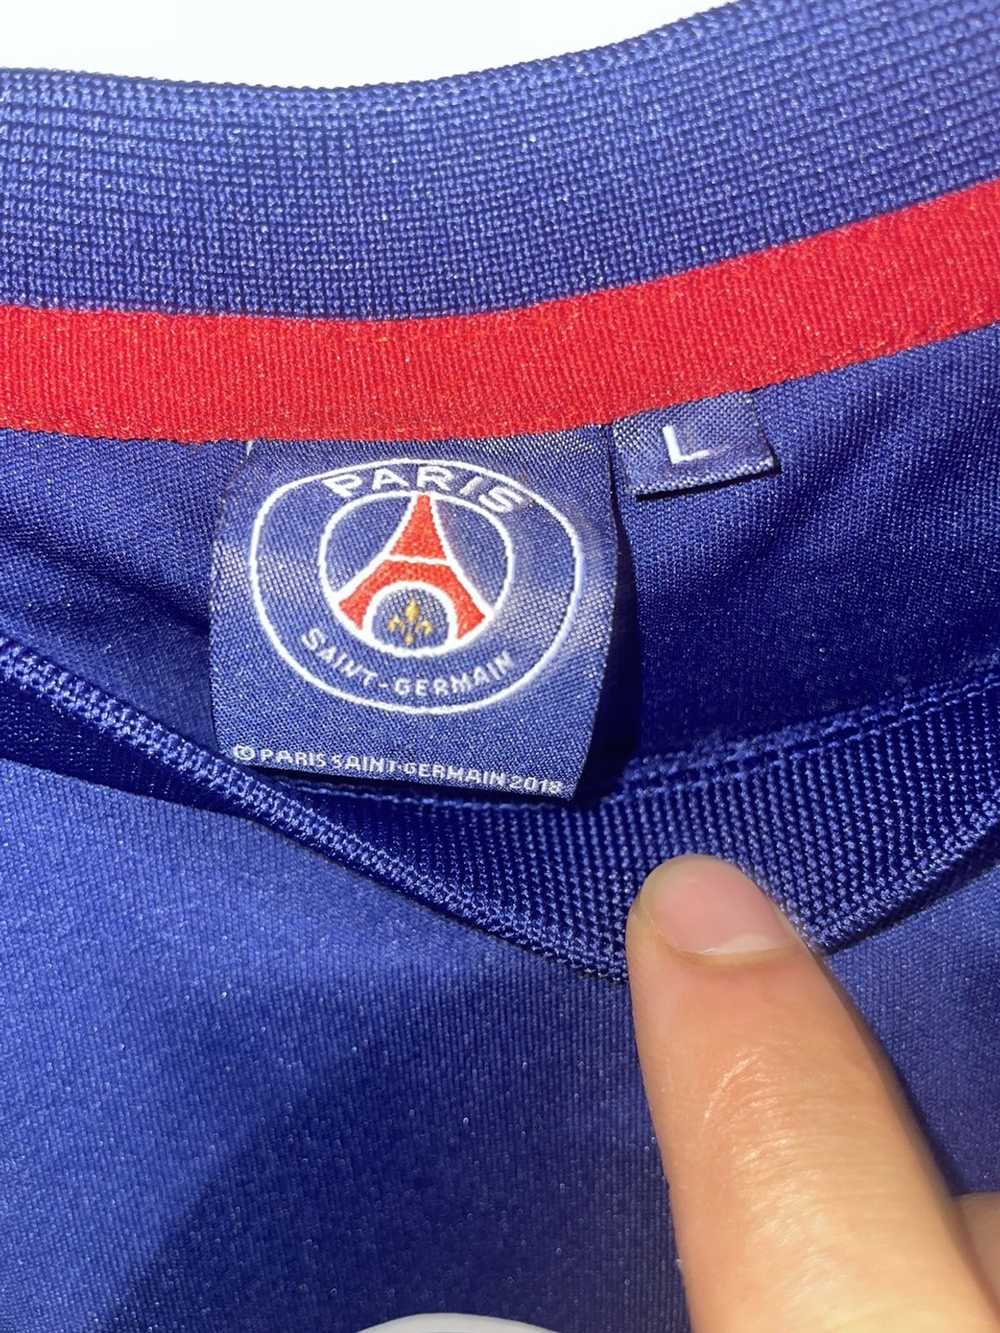 Soccer Jersey Paris saint germain jersey - image 2